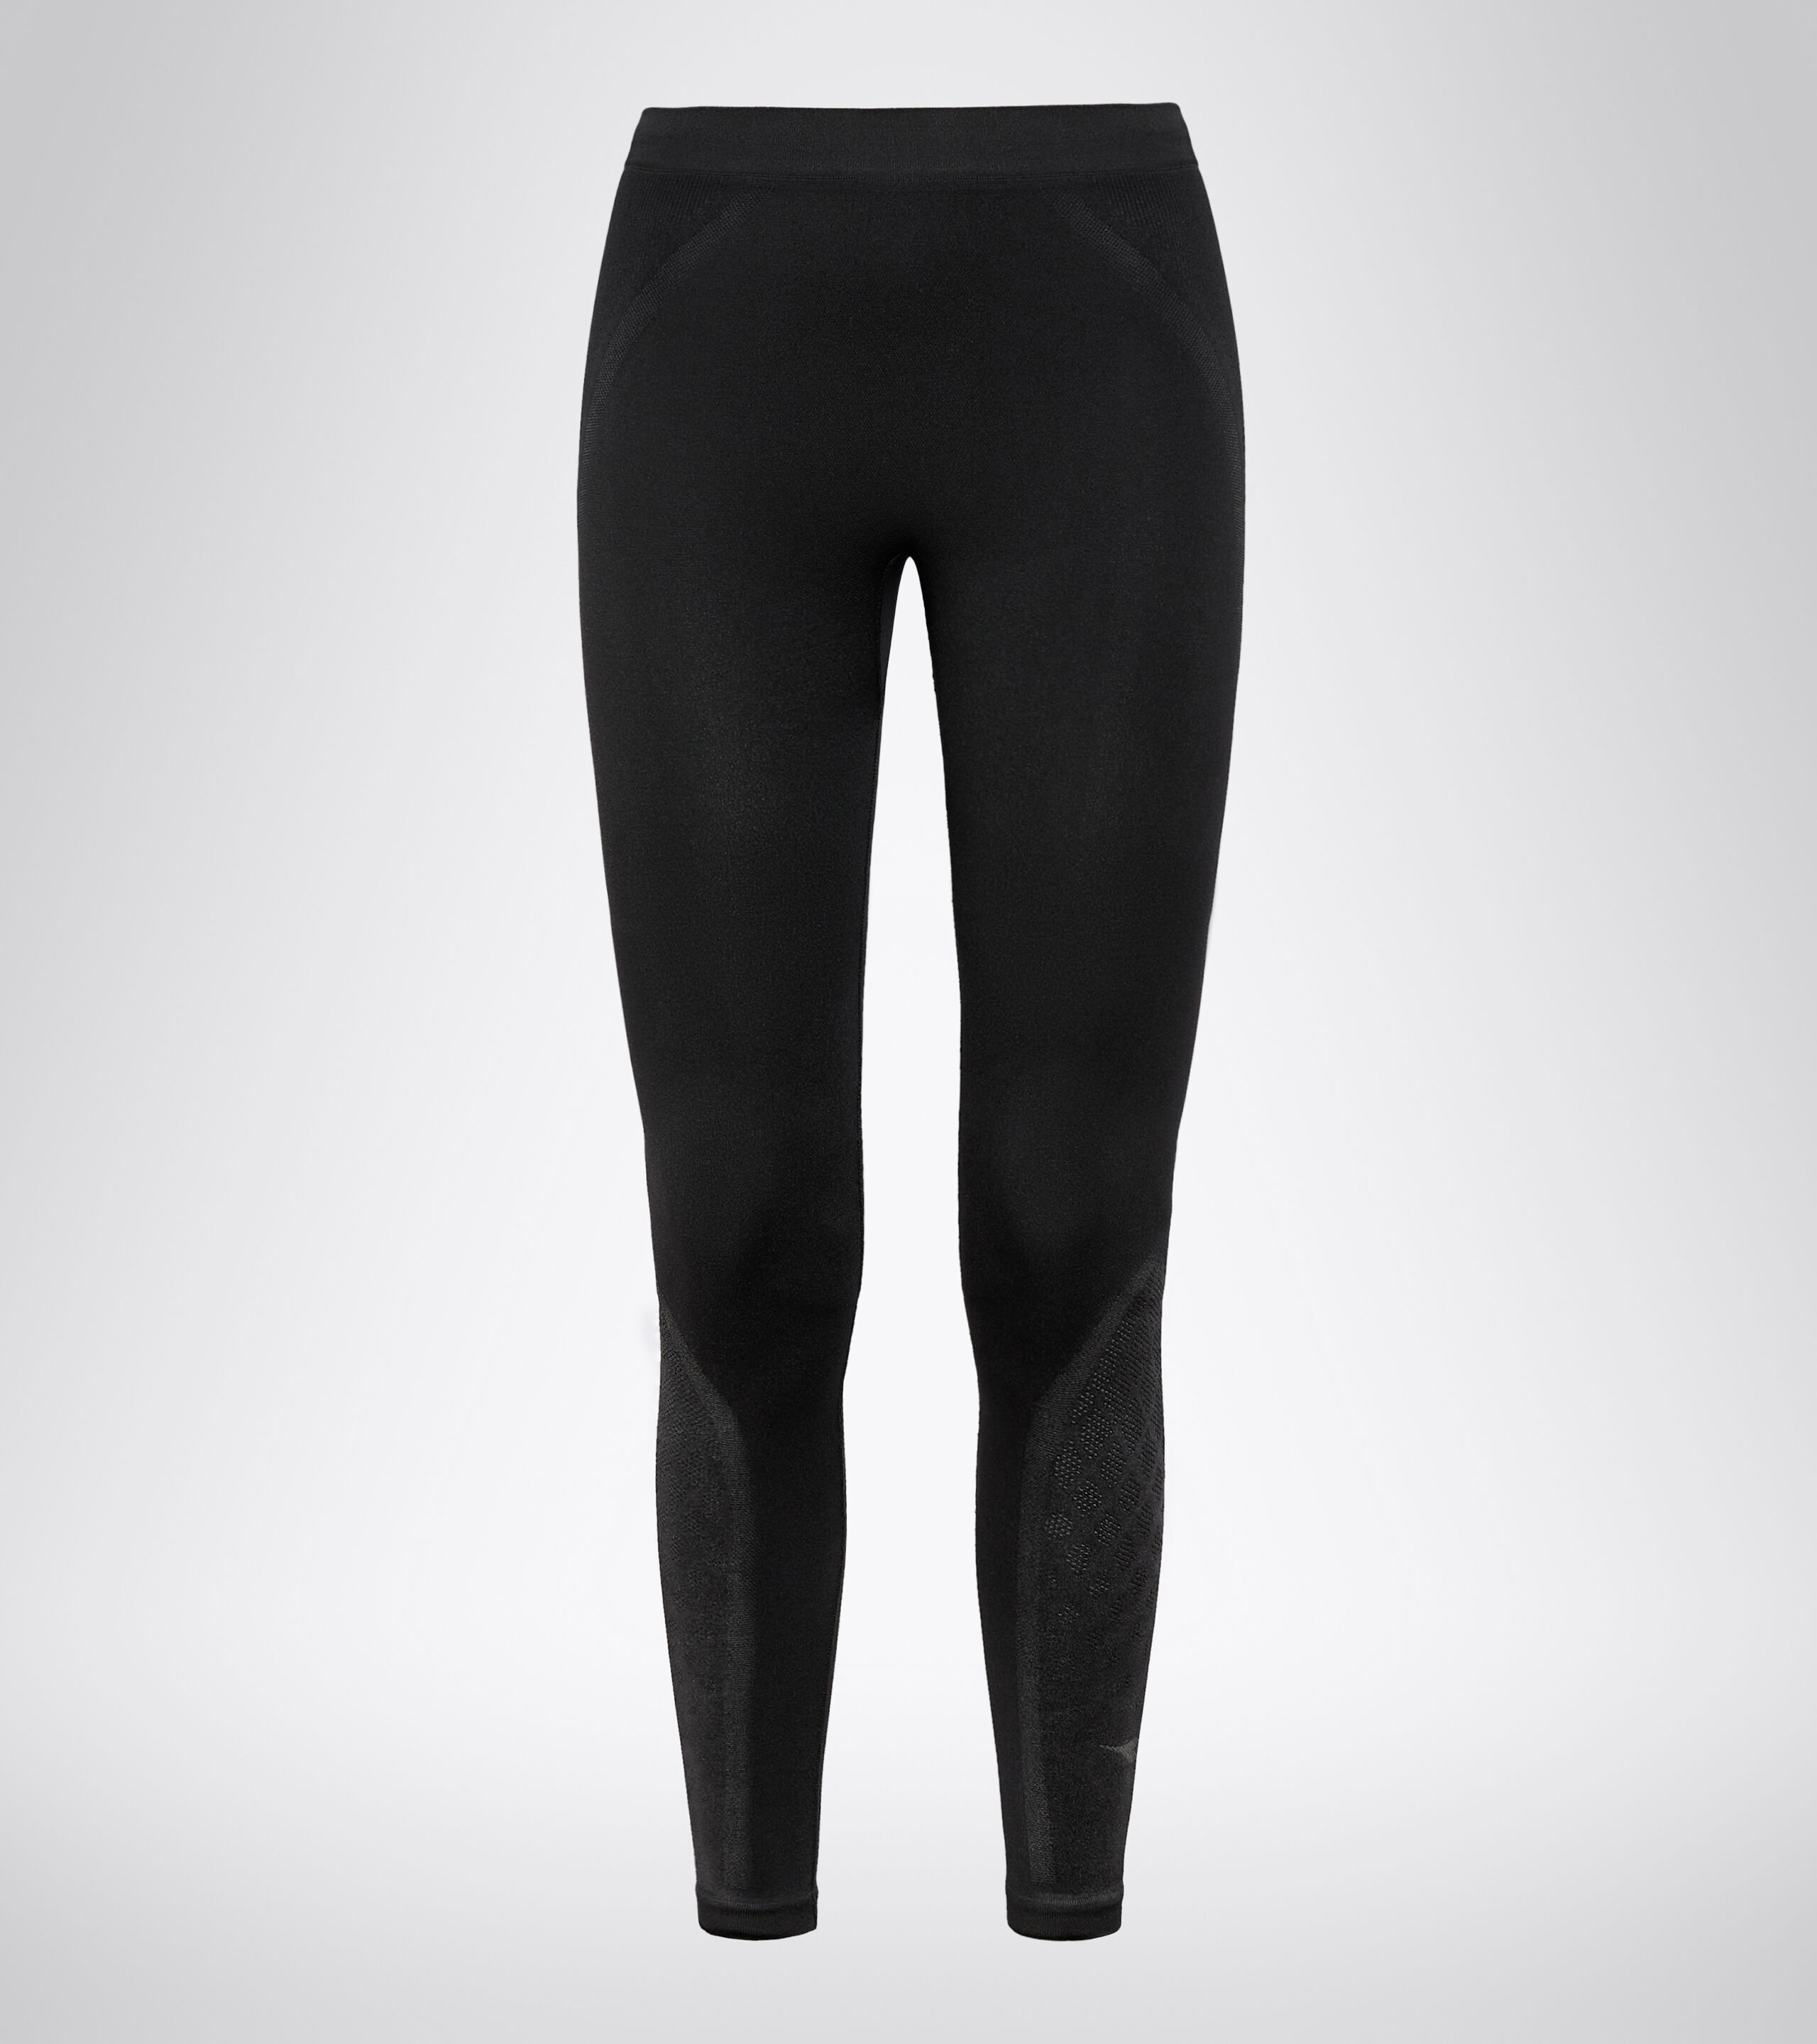 Nike Womens Bliss Training Trousers (Black/Clear) | Sportpursuit.com